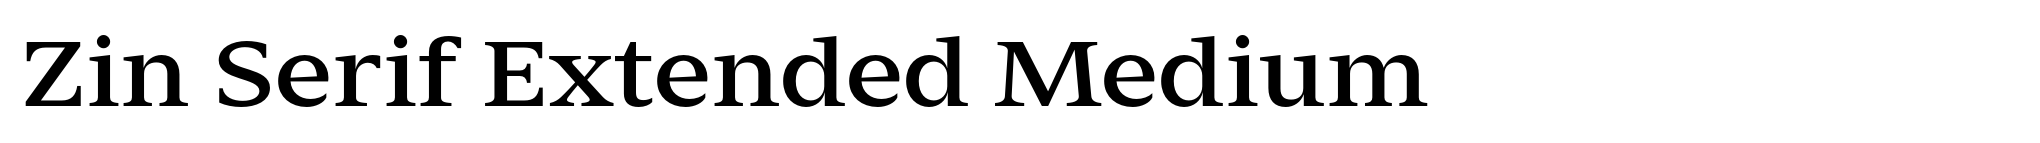 Zin Serif Extended Medium image